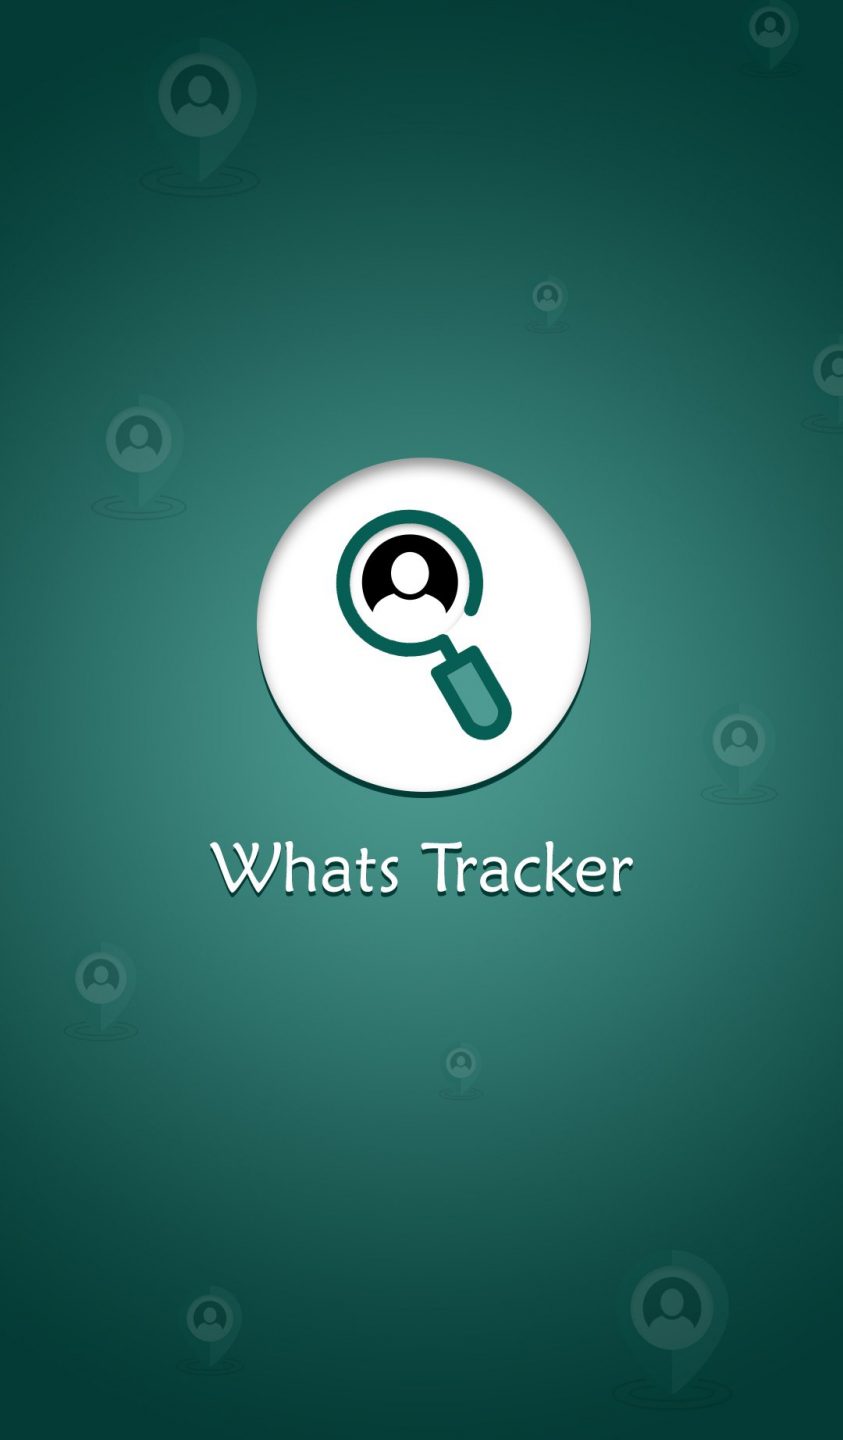 WhatsApp: Whats Tracker